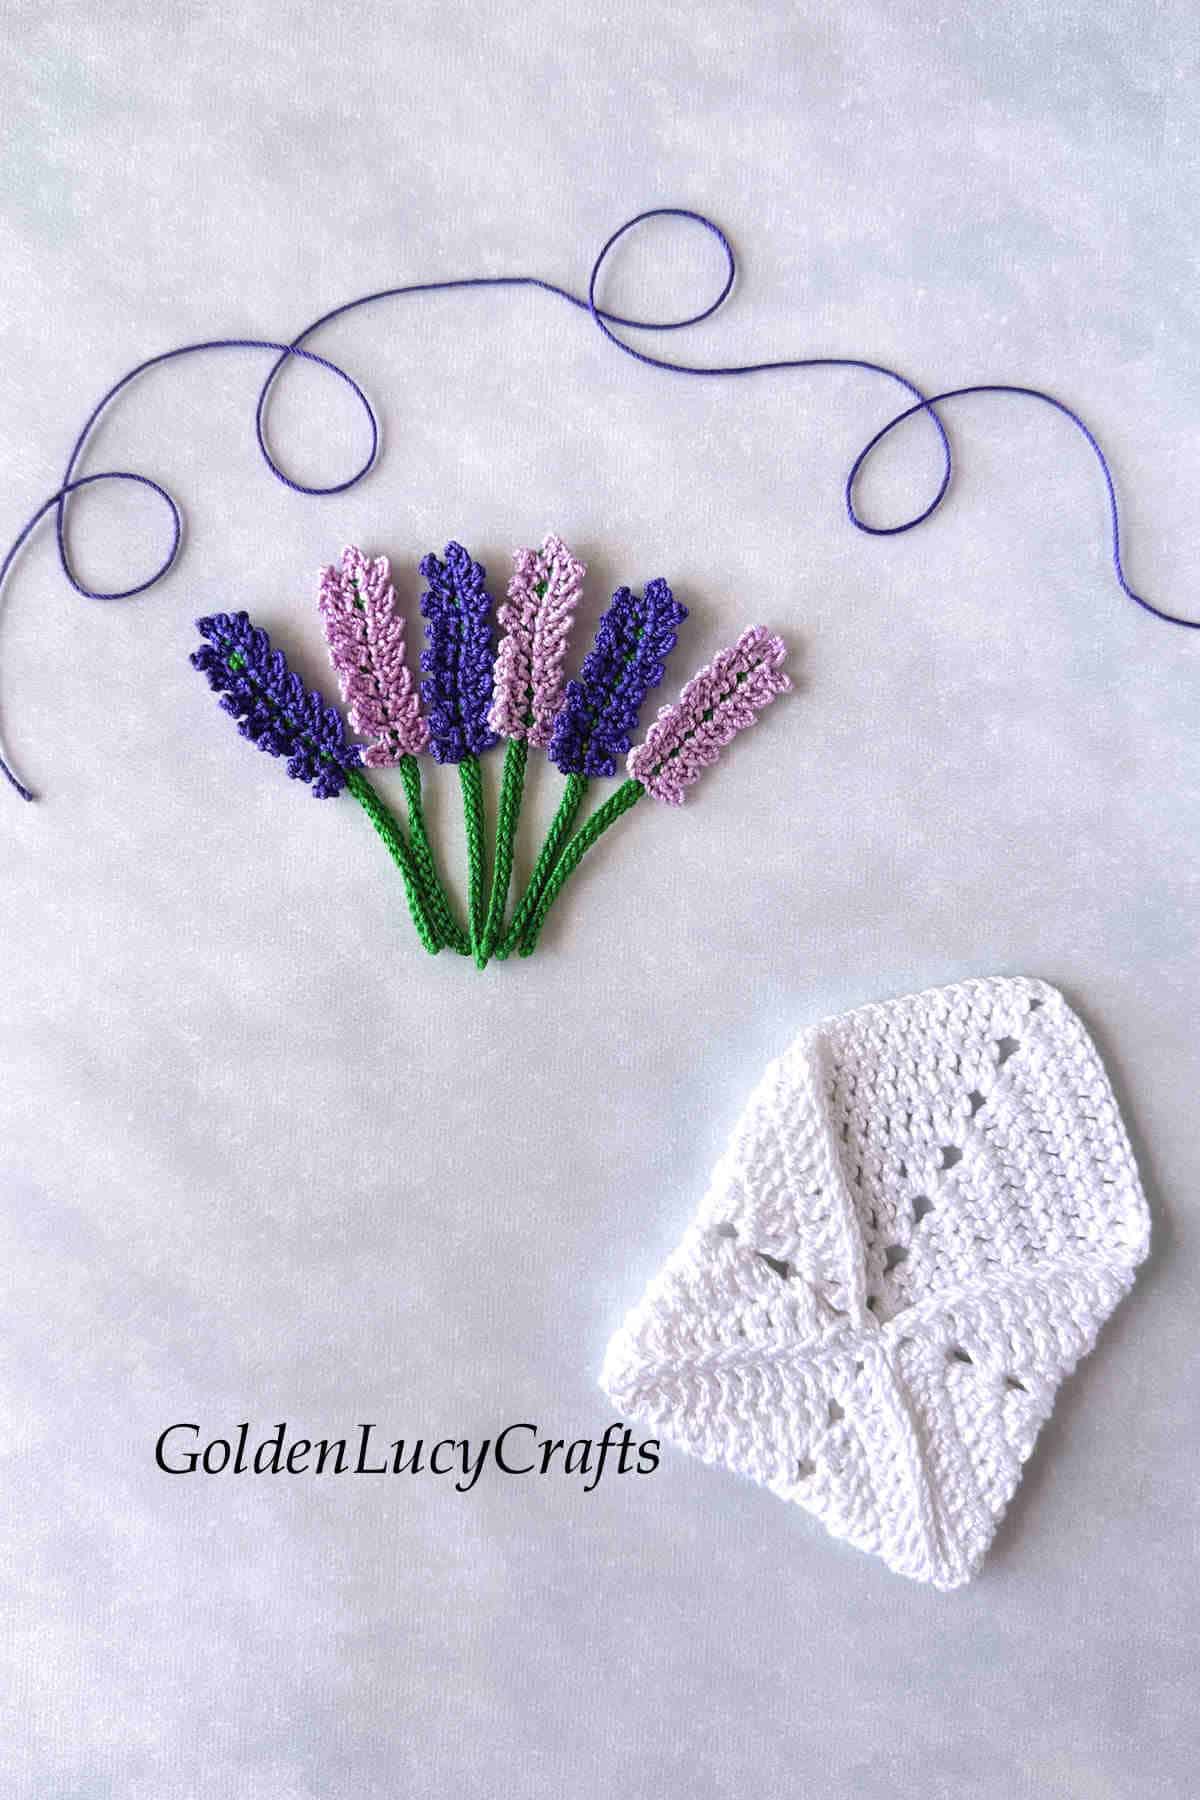 Crocheted white envelope and lavender flowers.